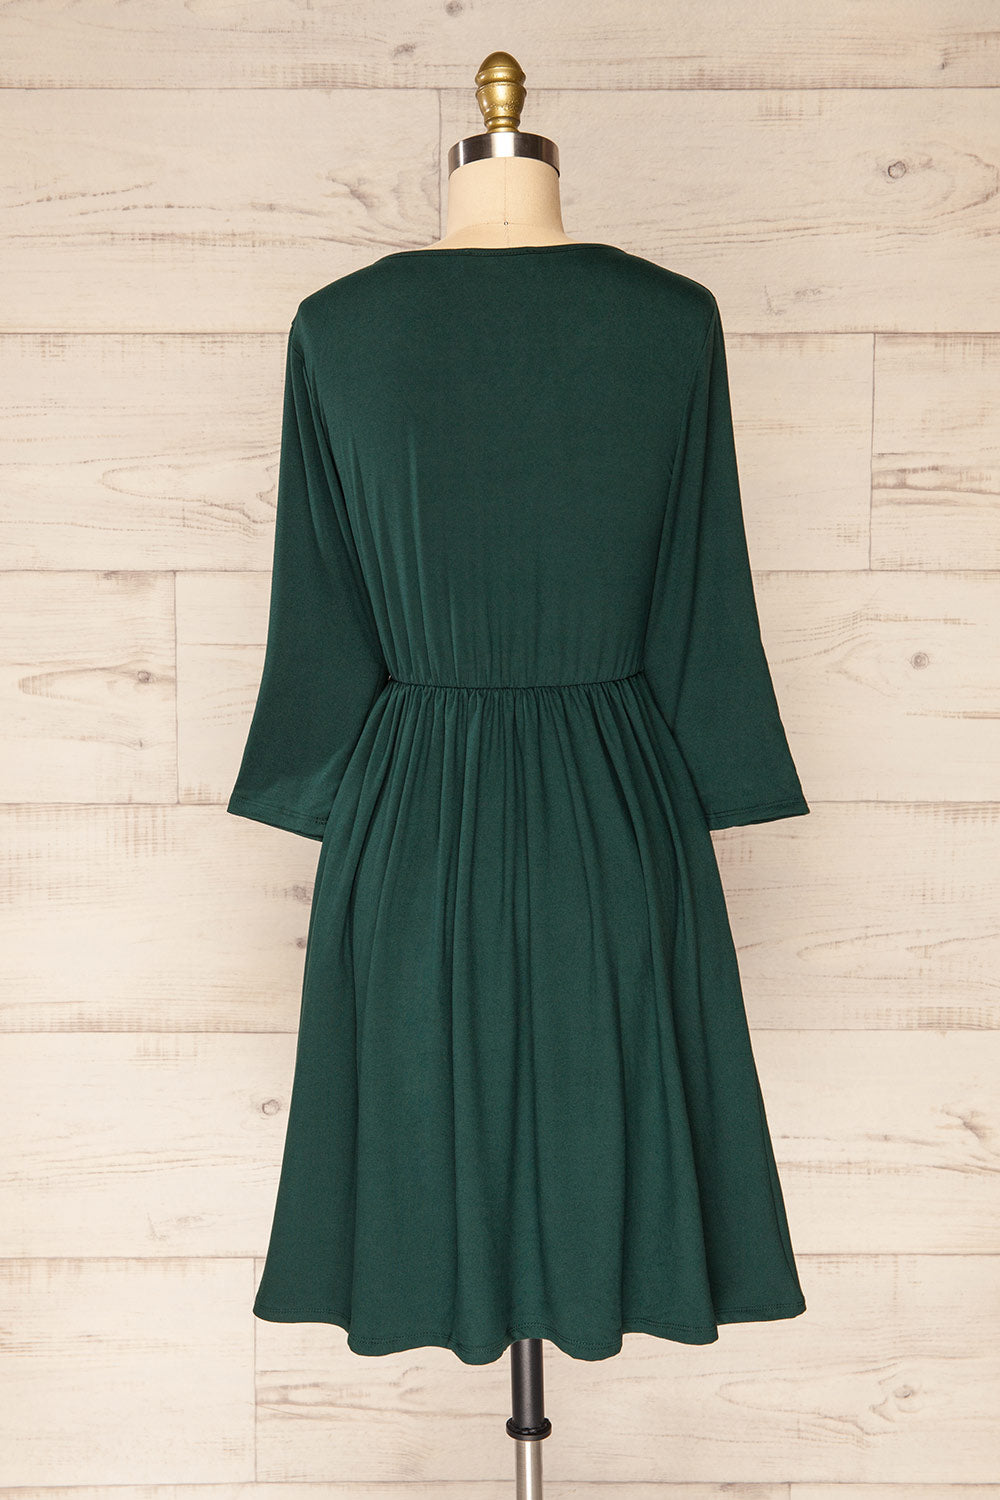 Hemili Forrest Green Wrap Neckline Short Dress | La petite garçonne back view 